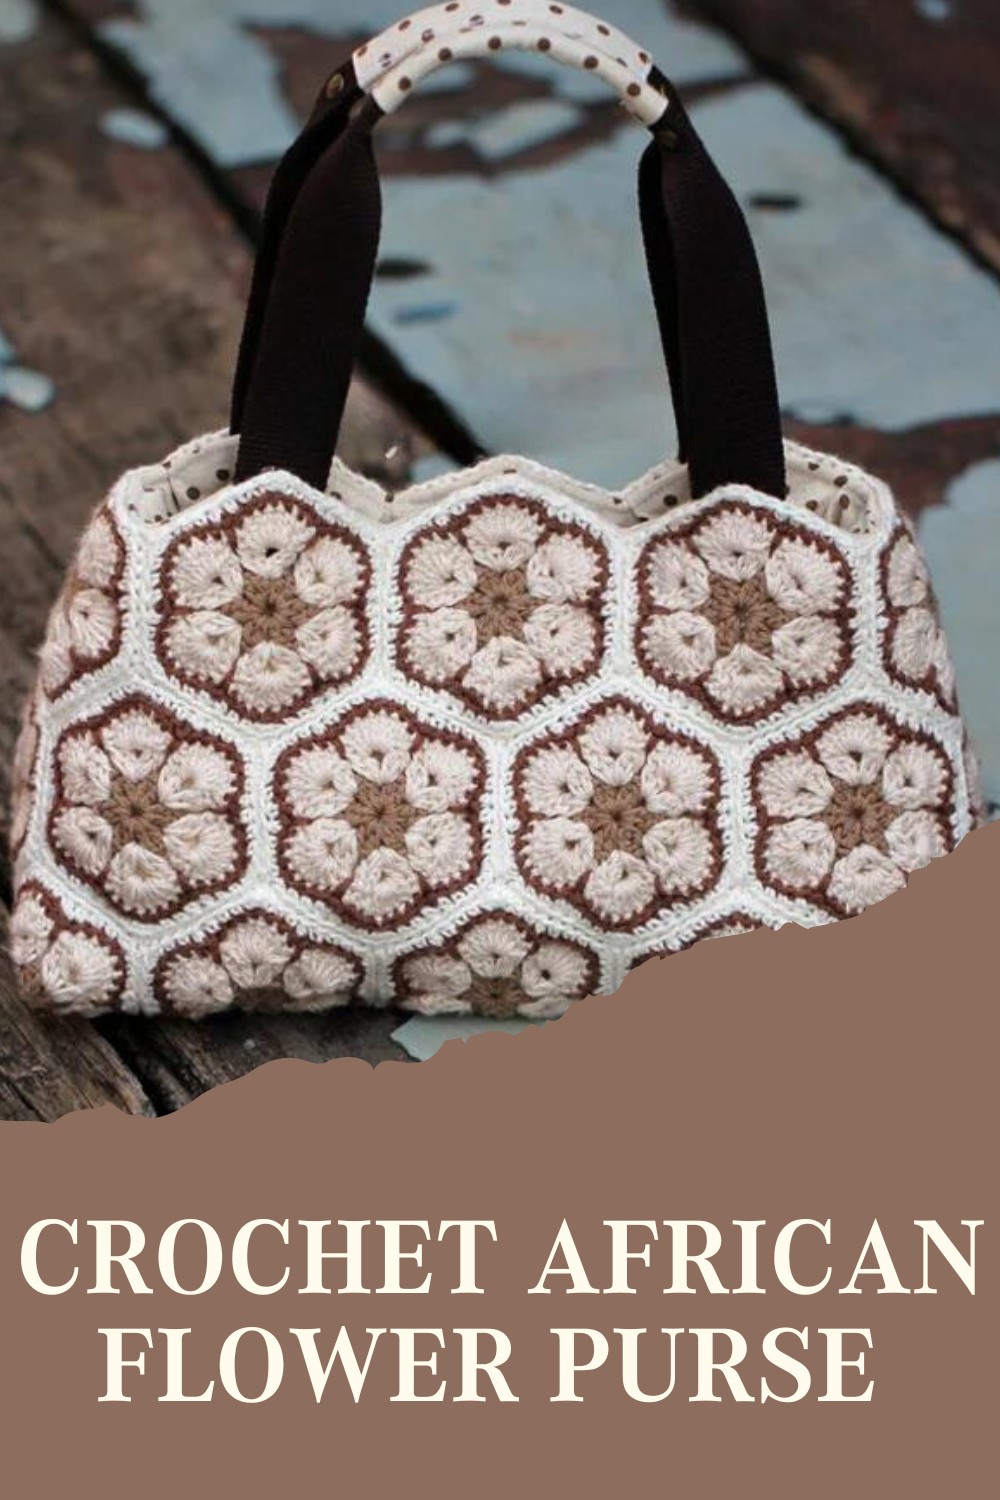 Crochet African Flower Purse Pattern